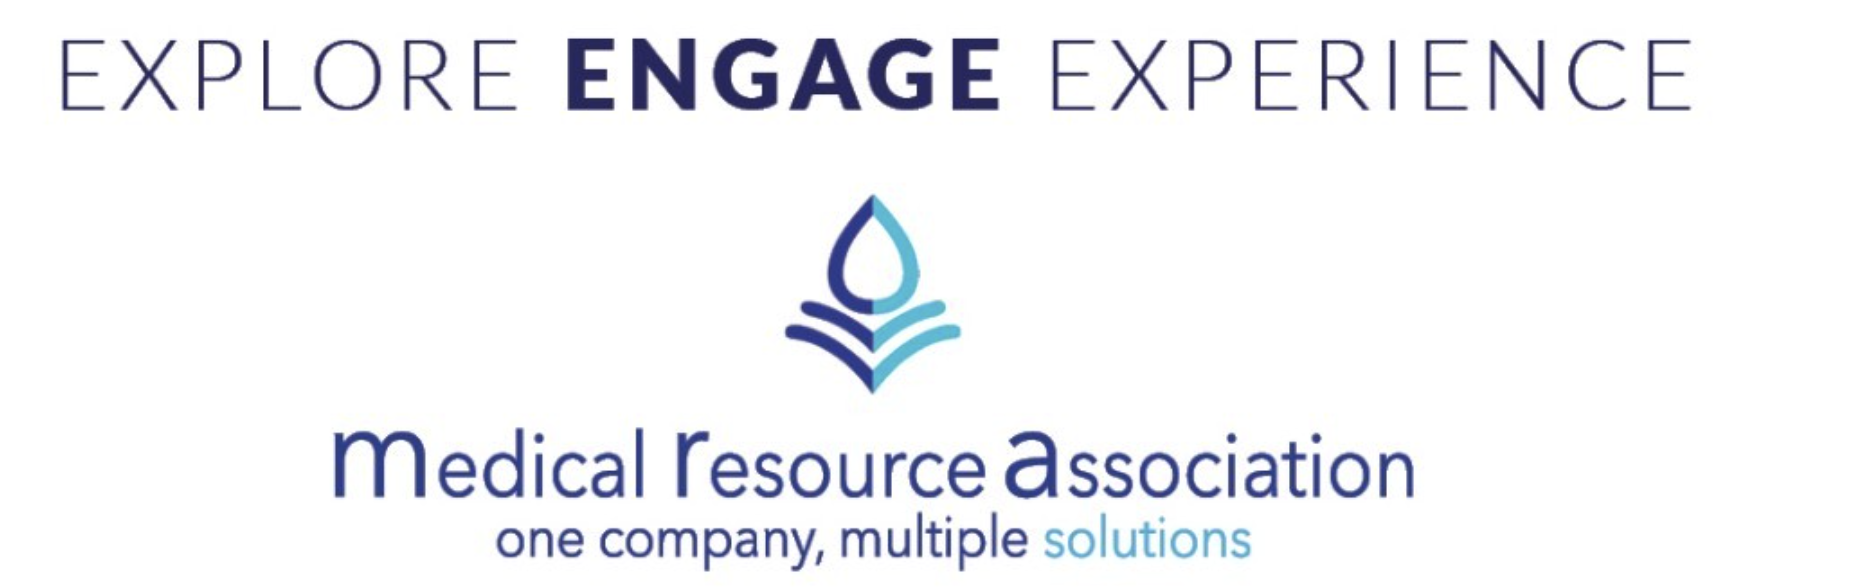 medical resource association logo